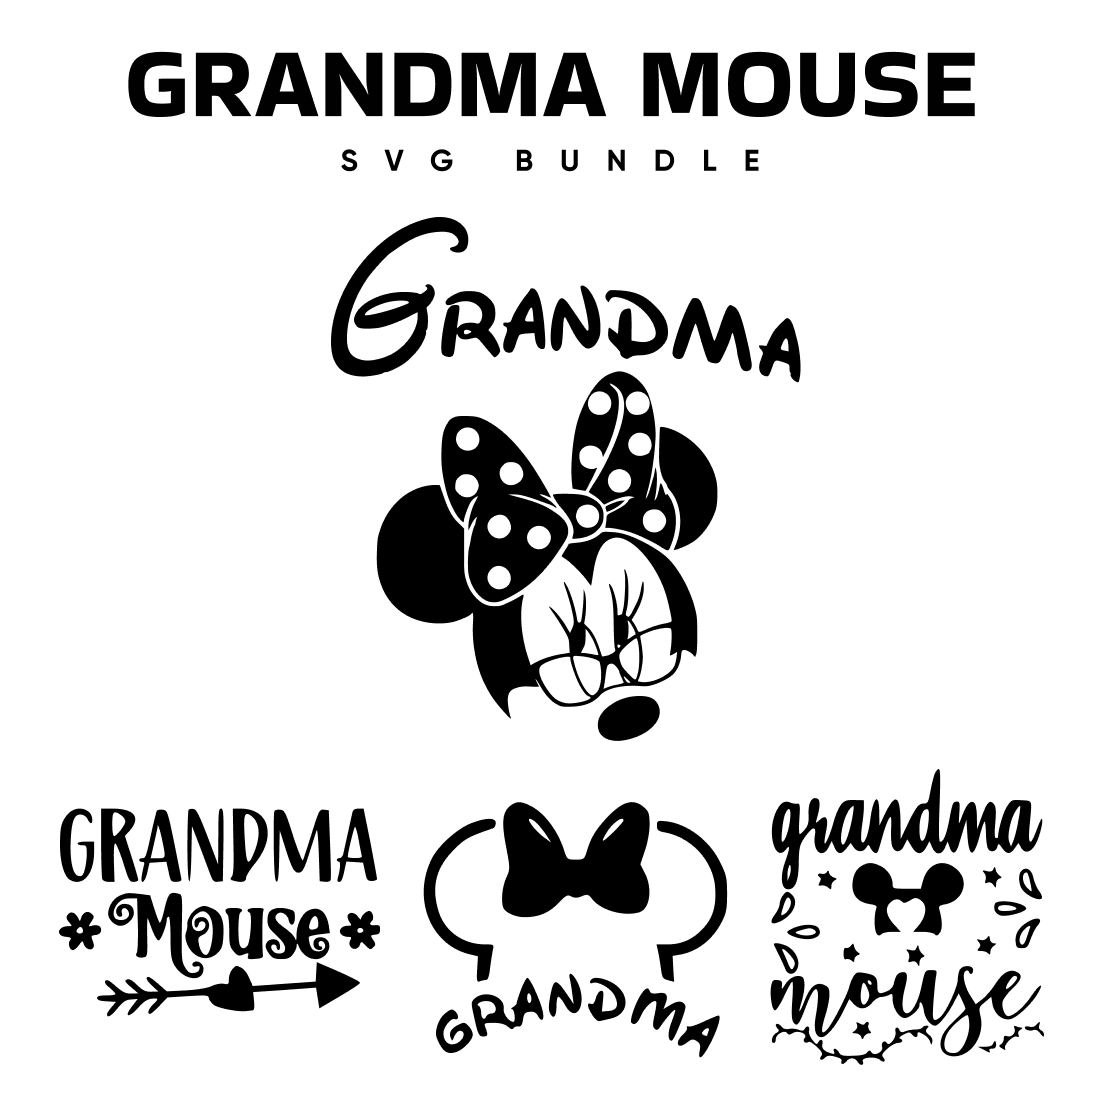 Grandma Mouse SVG.